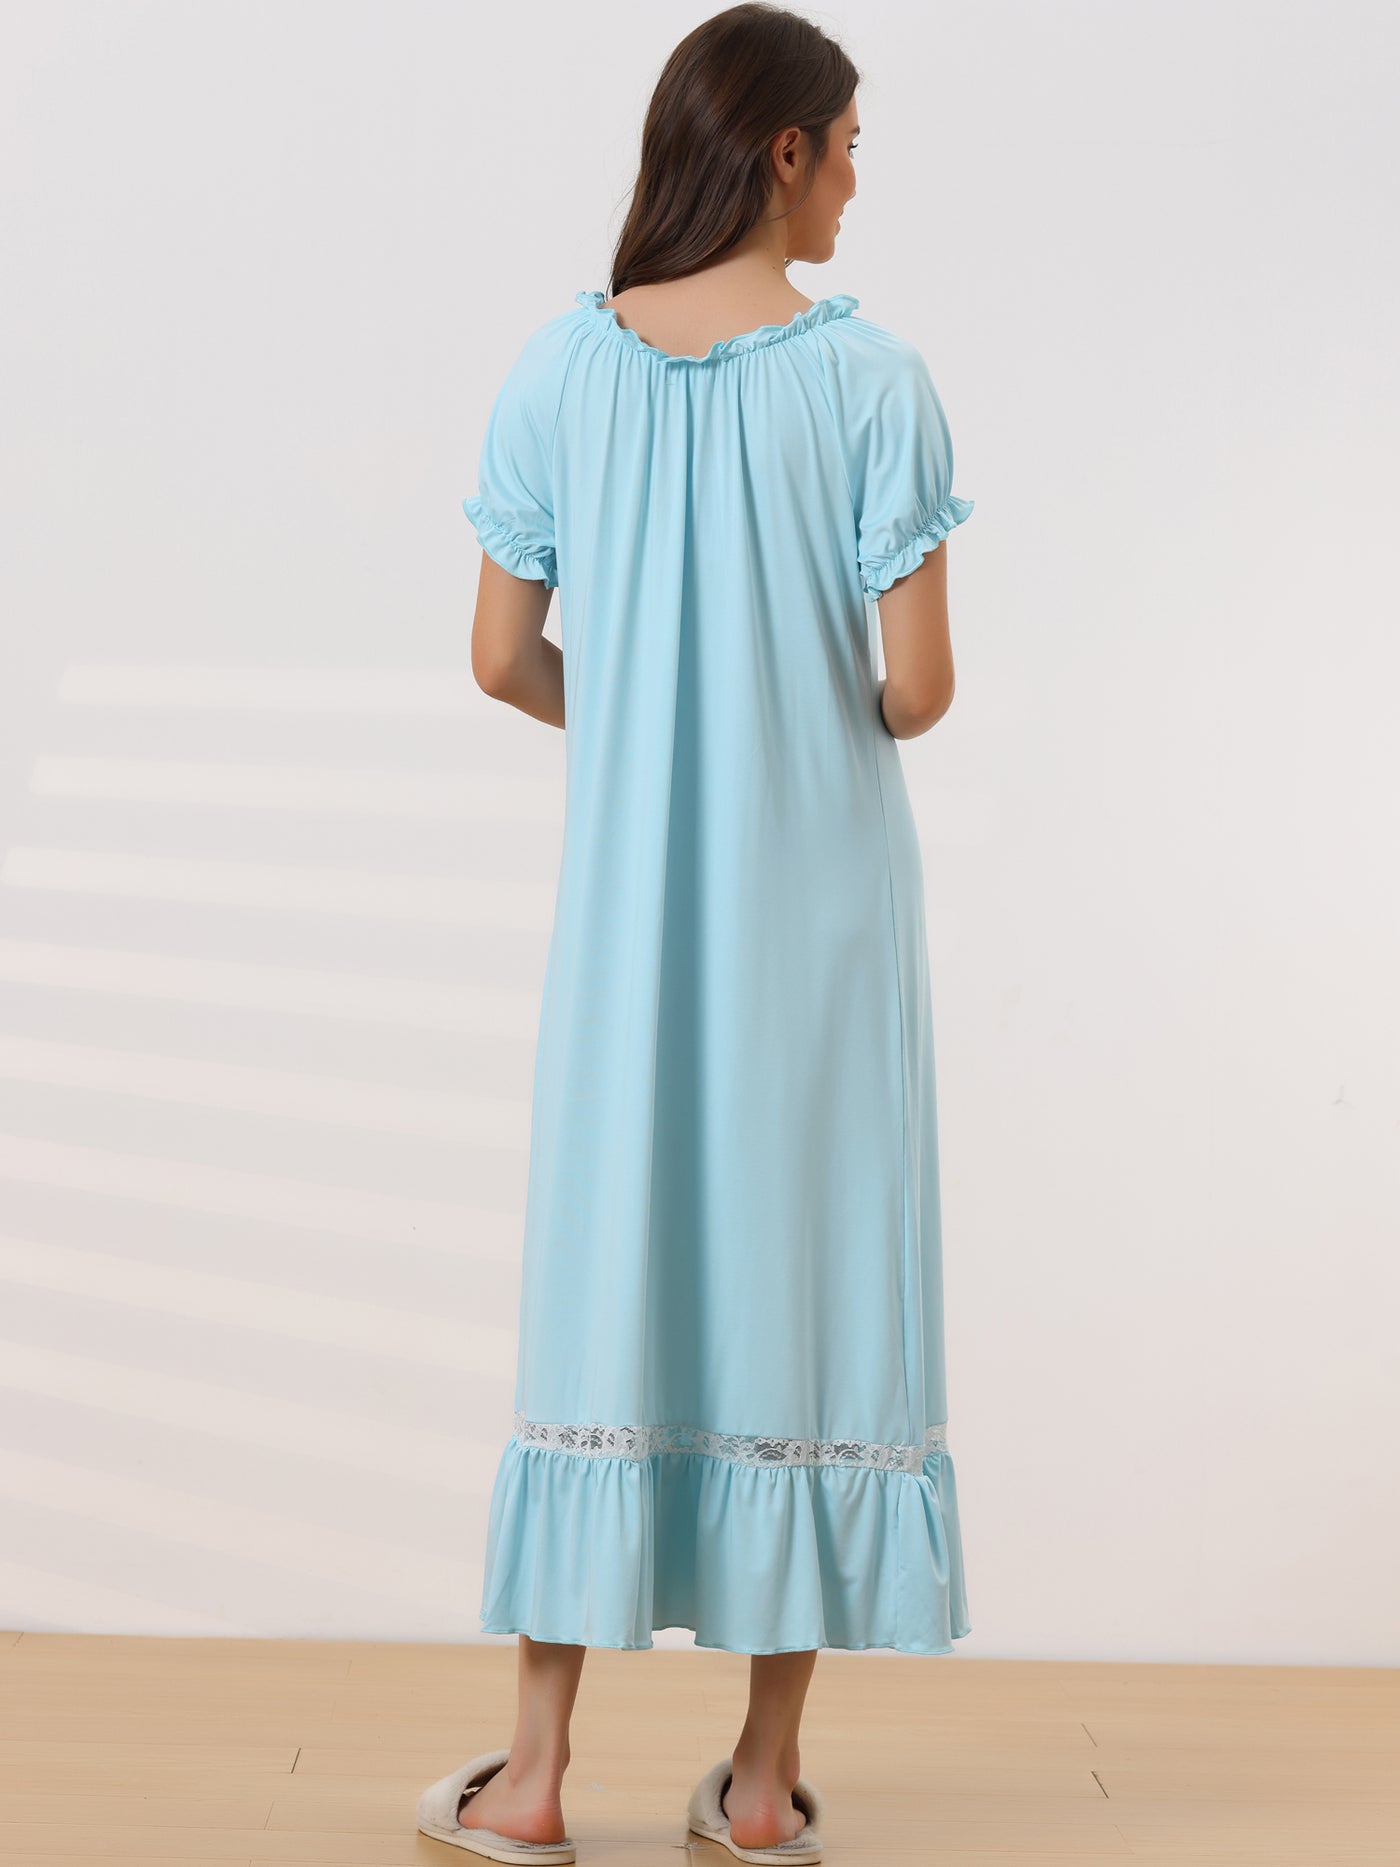 Bublédon Womens Victorian Nightgown Ruffle Short Sleeve Tie Neck Nightshirt Pajama Sleep Dress